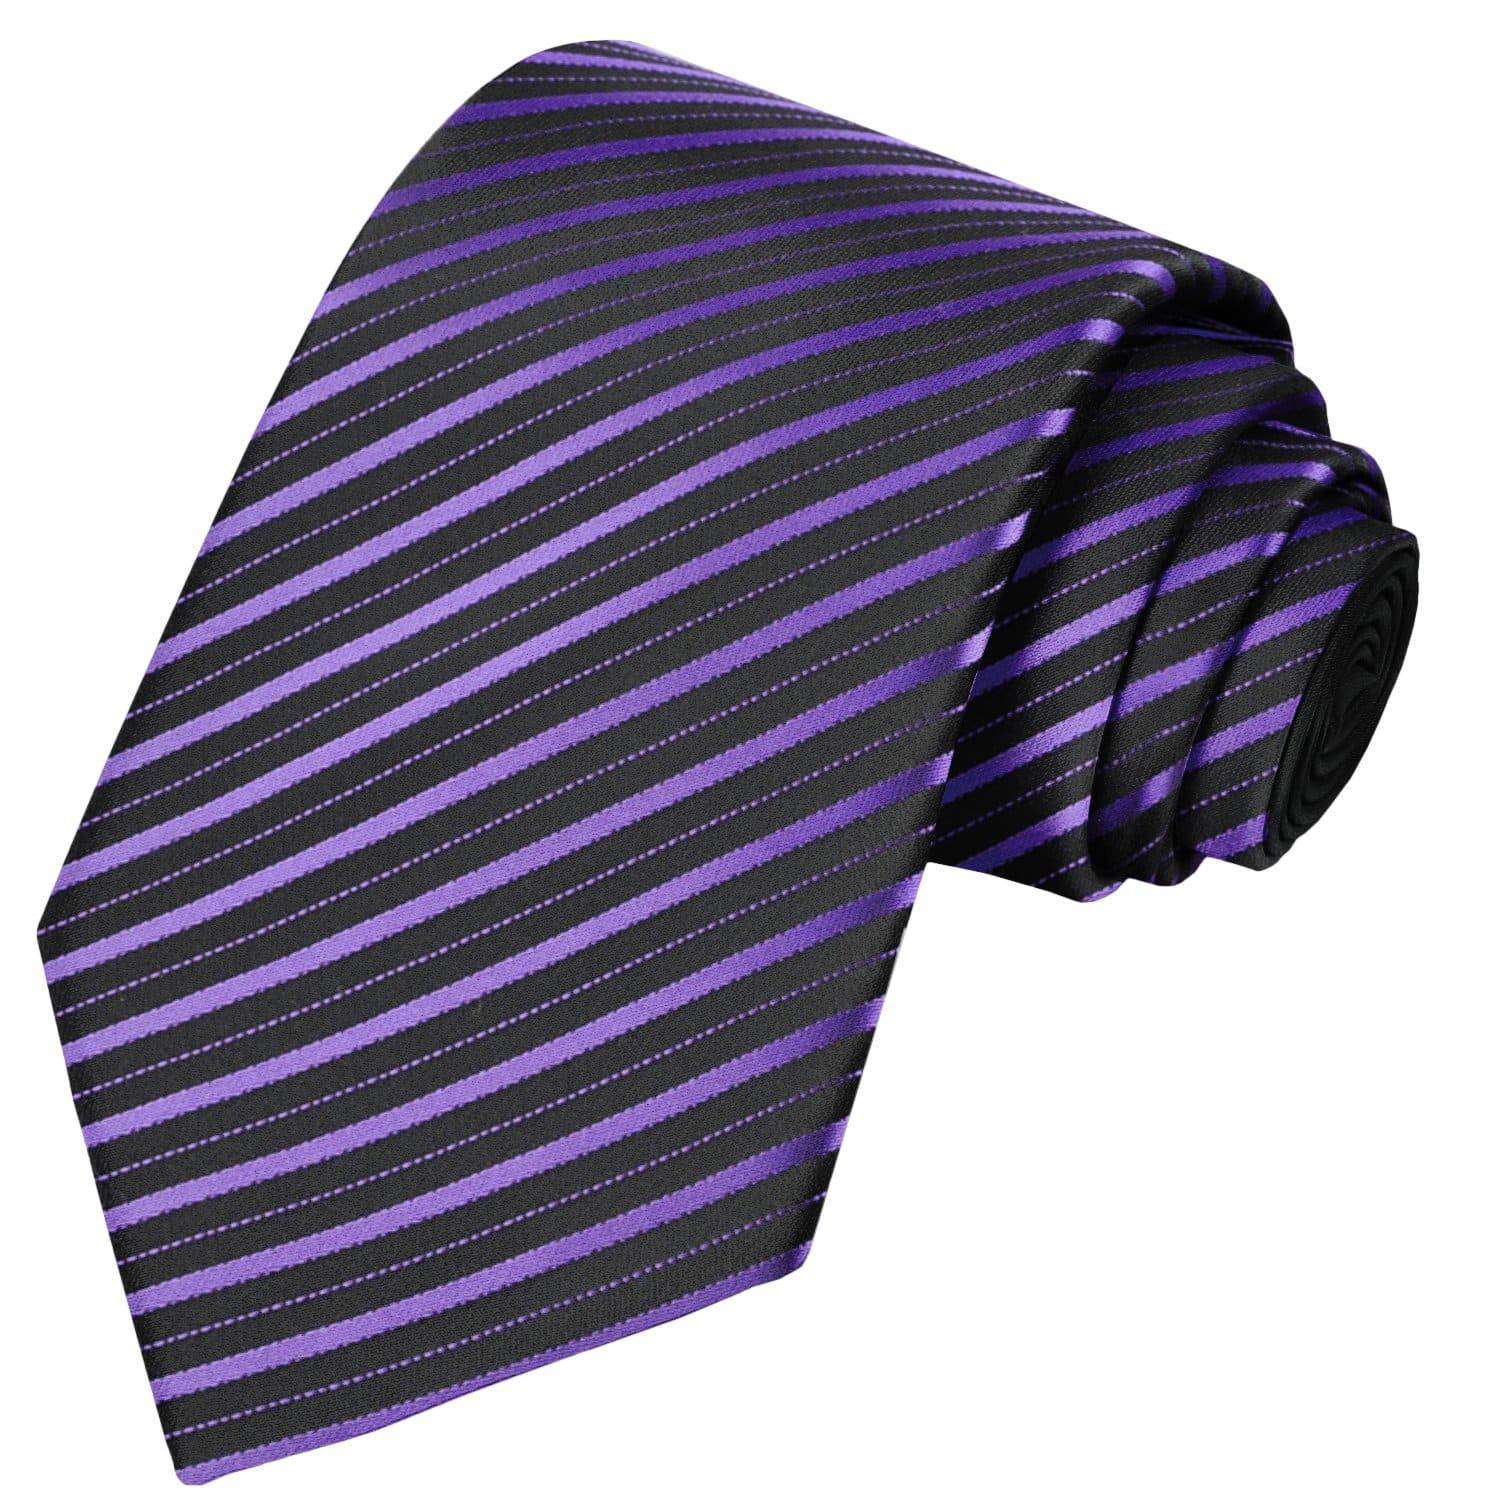 Orchid Purple-Black Striped Tie - Tie, bowtie, pocket square  | Kissties